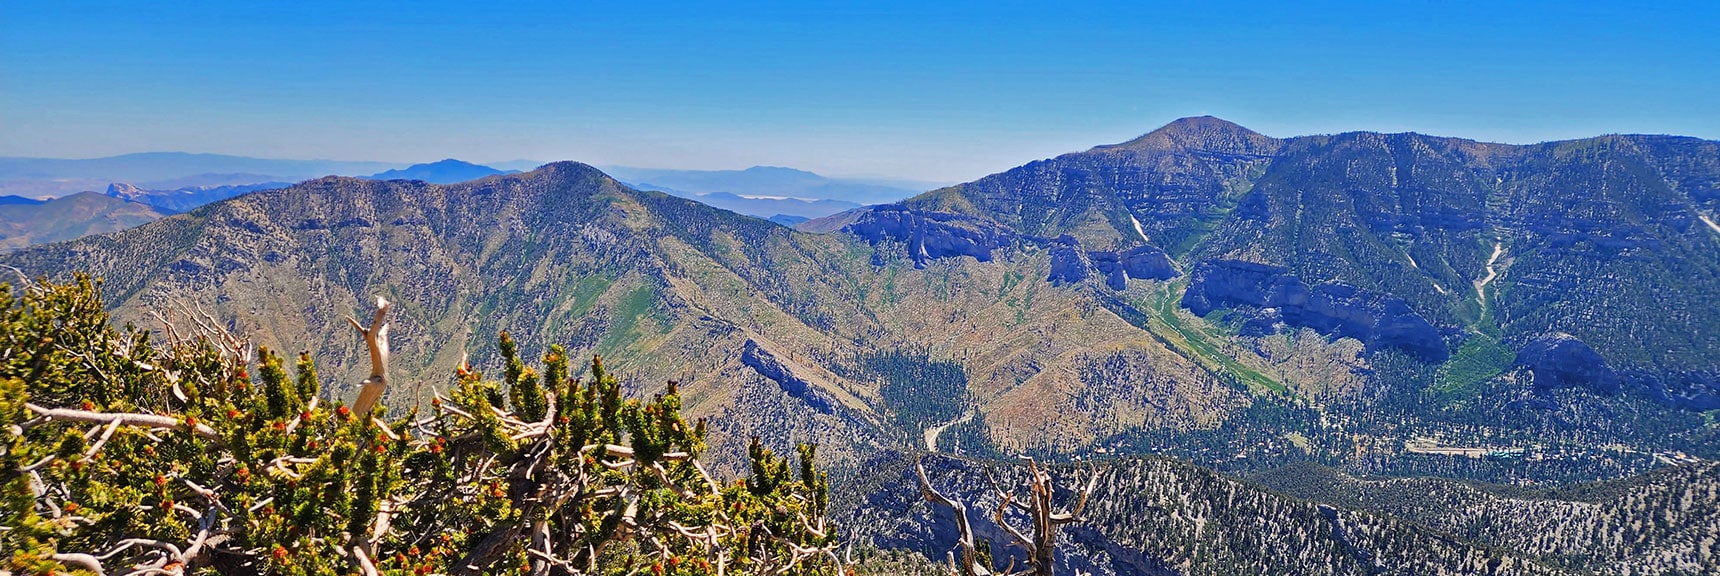 Harris Mt. & Griffith Peak, Saddle Between. Spine of Harris Mt. E. & W, Approach Ridges | Fletcher Canyon / Fletcher Peak / Cockscomb Ridge Circuit | Mt. Charleston Wilderness | Spring Mountains, Nevada